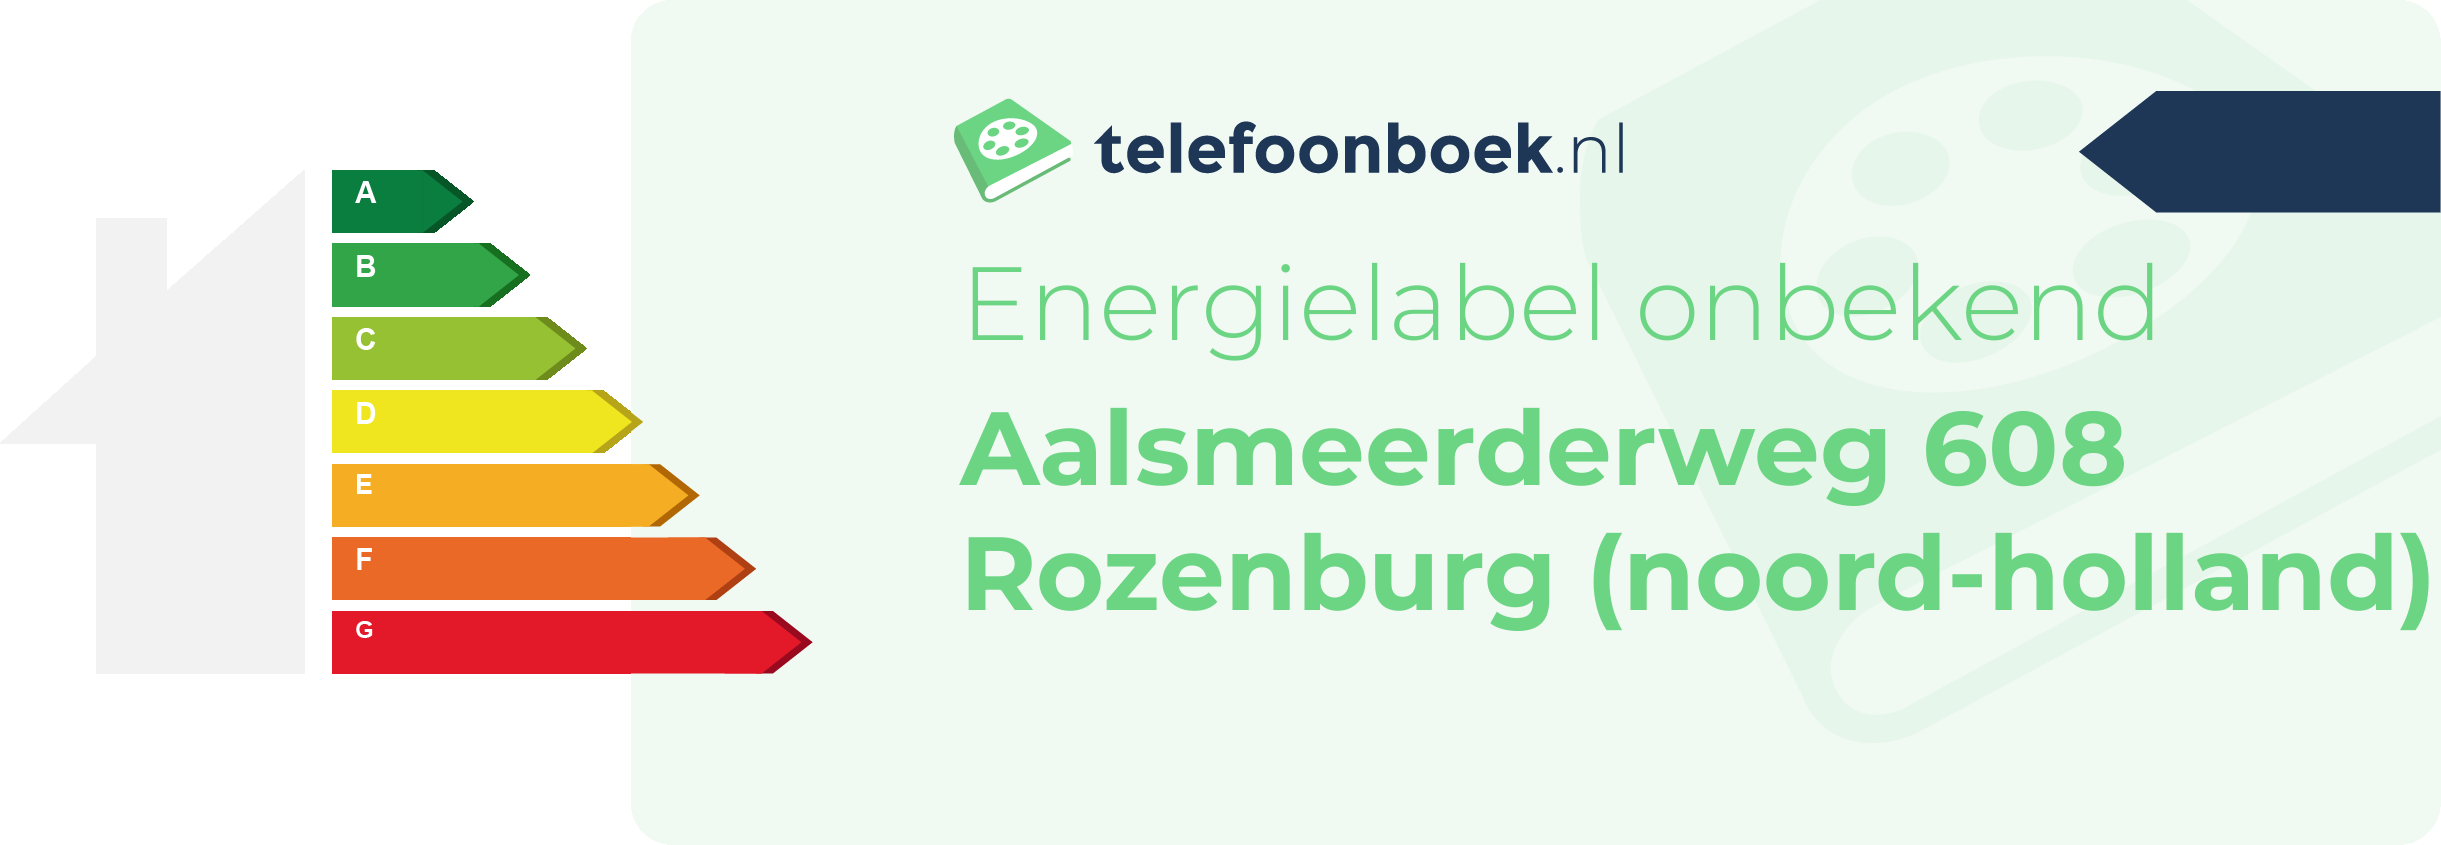 Energielabel Aalsmeerderweg 608 Rozenburg (Noord-Holland)